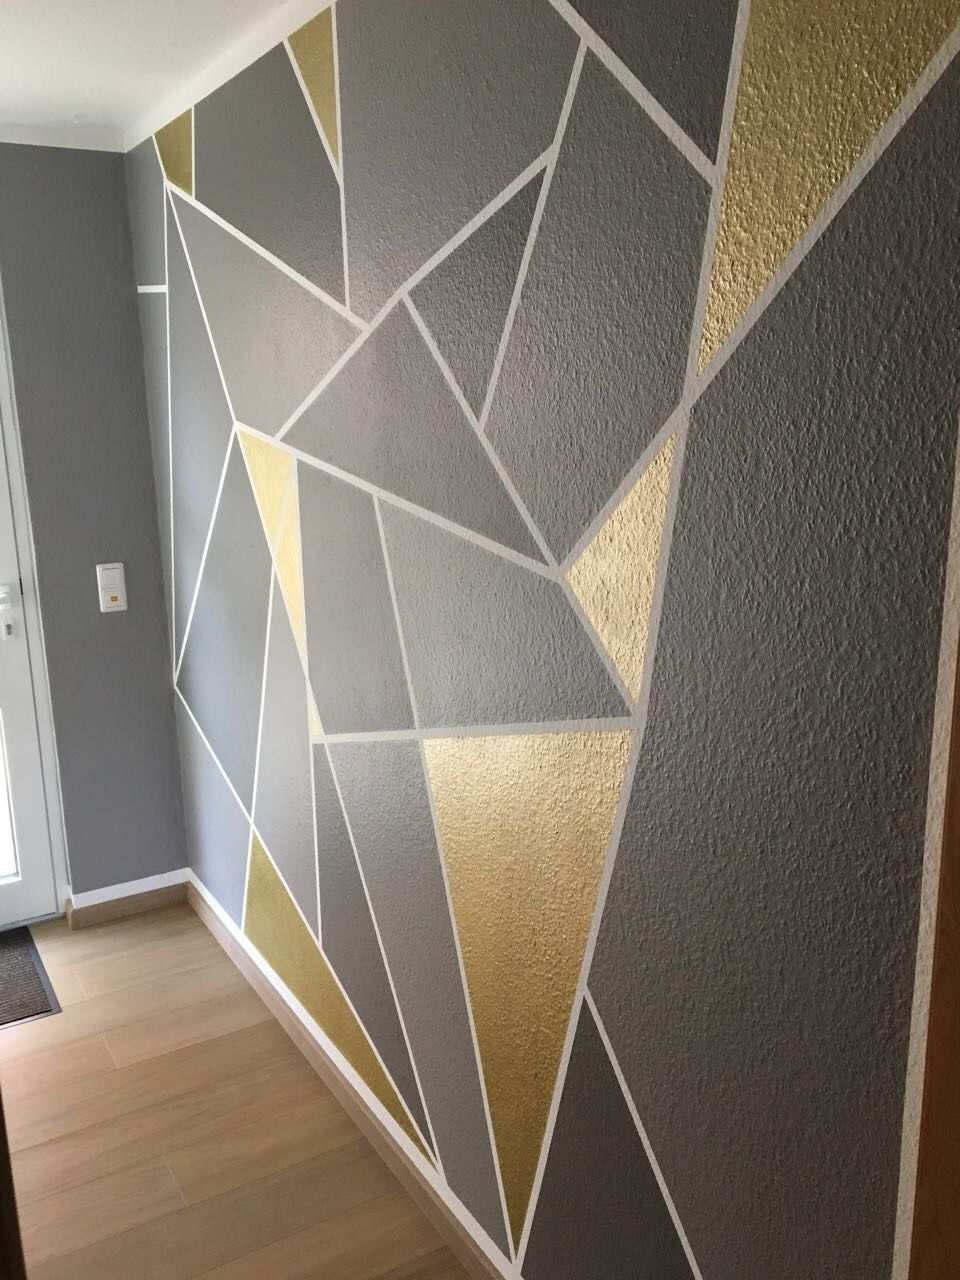 Geometrisches Wand Design Wand Muster Wand Muster Bedroom Wall Designs Bedroom Wall Paint Bedroom Wall